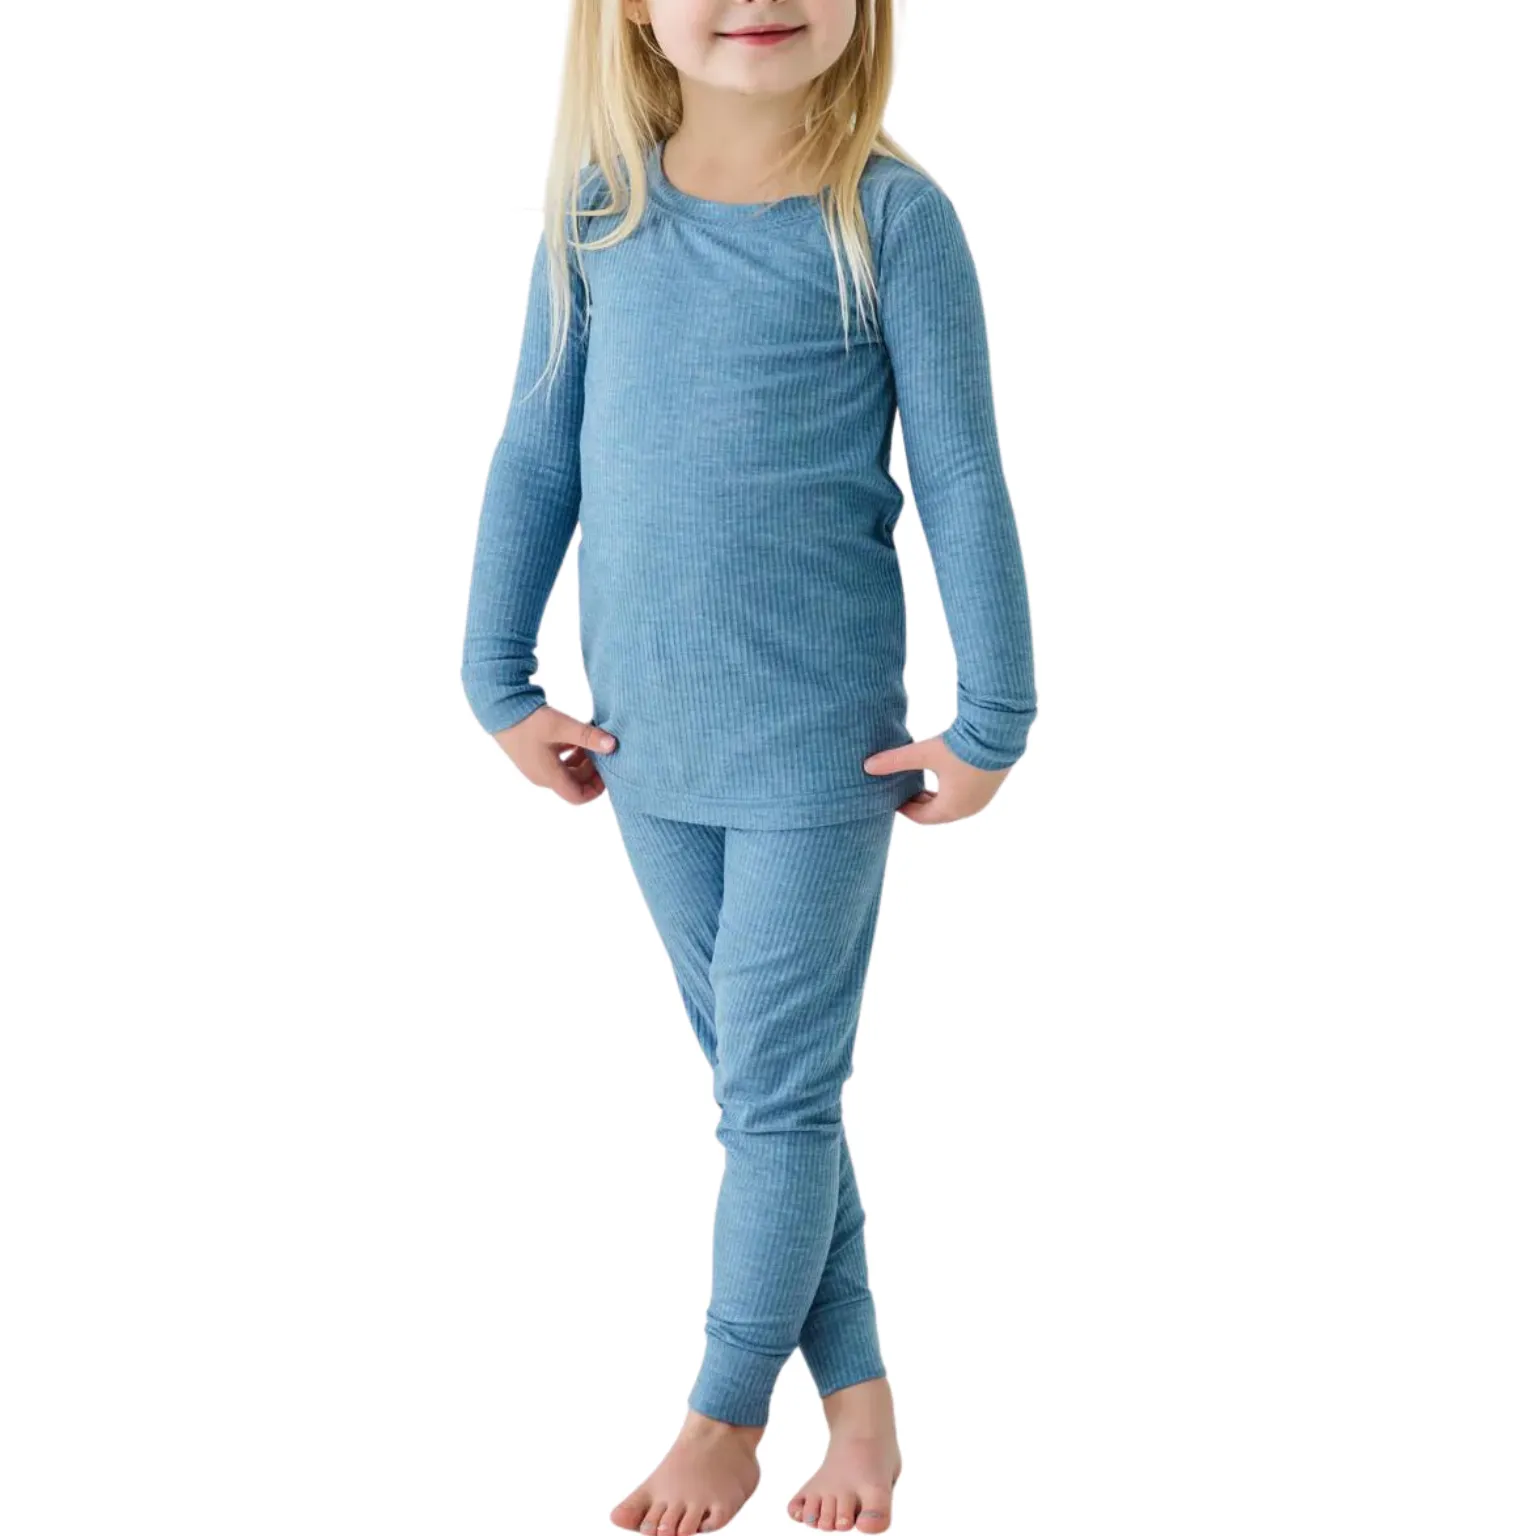 Premium OEM Long Sleeve Pajamas manufacturing service